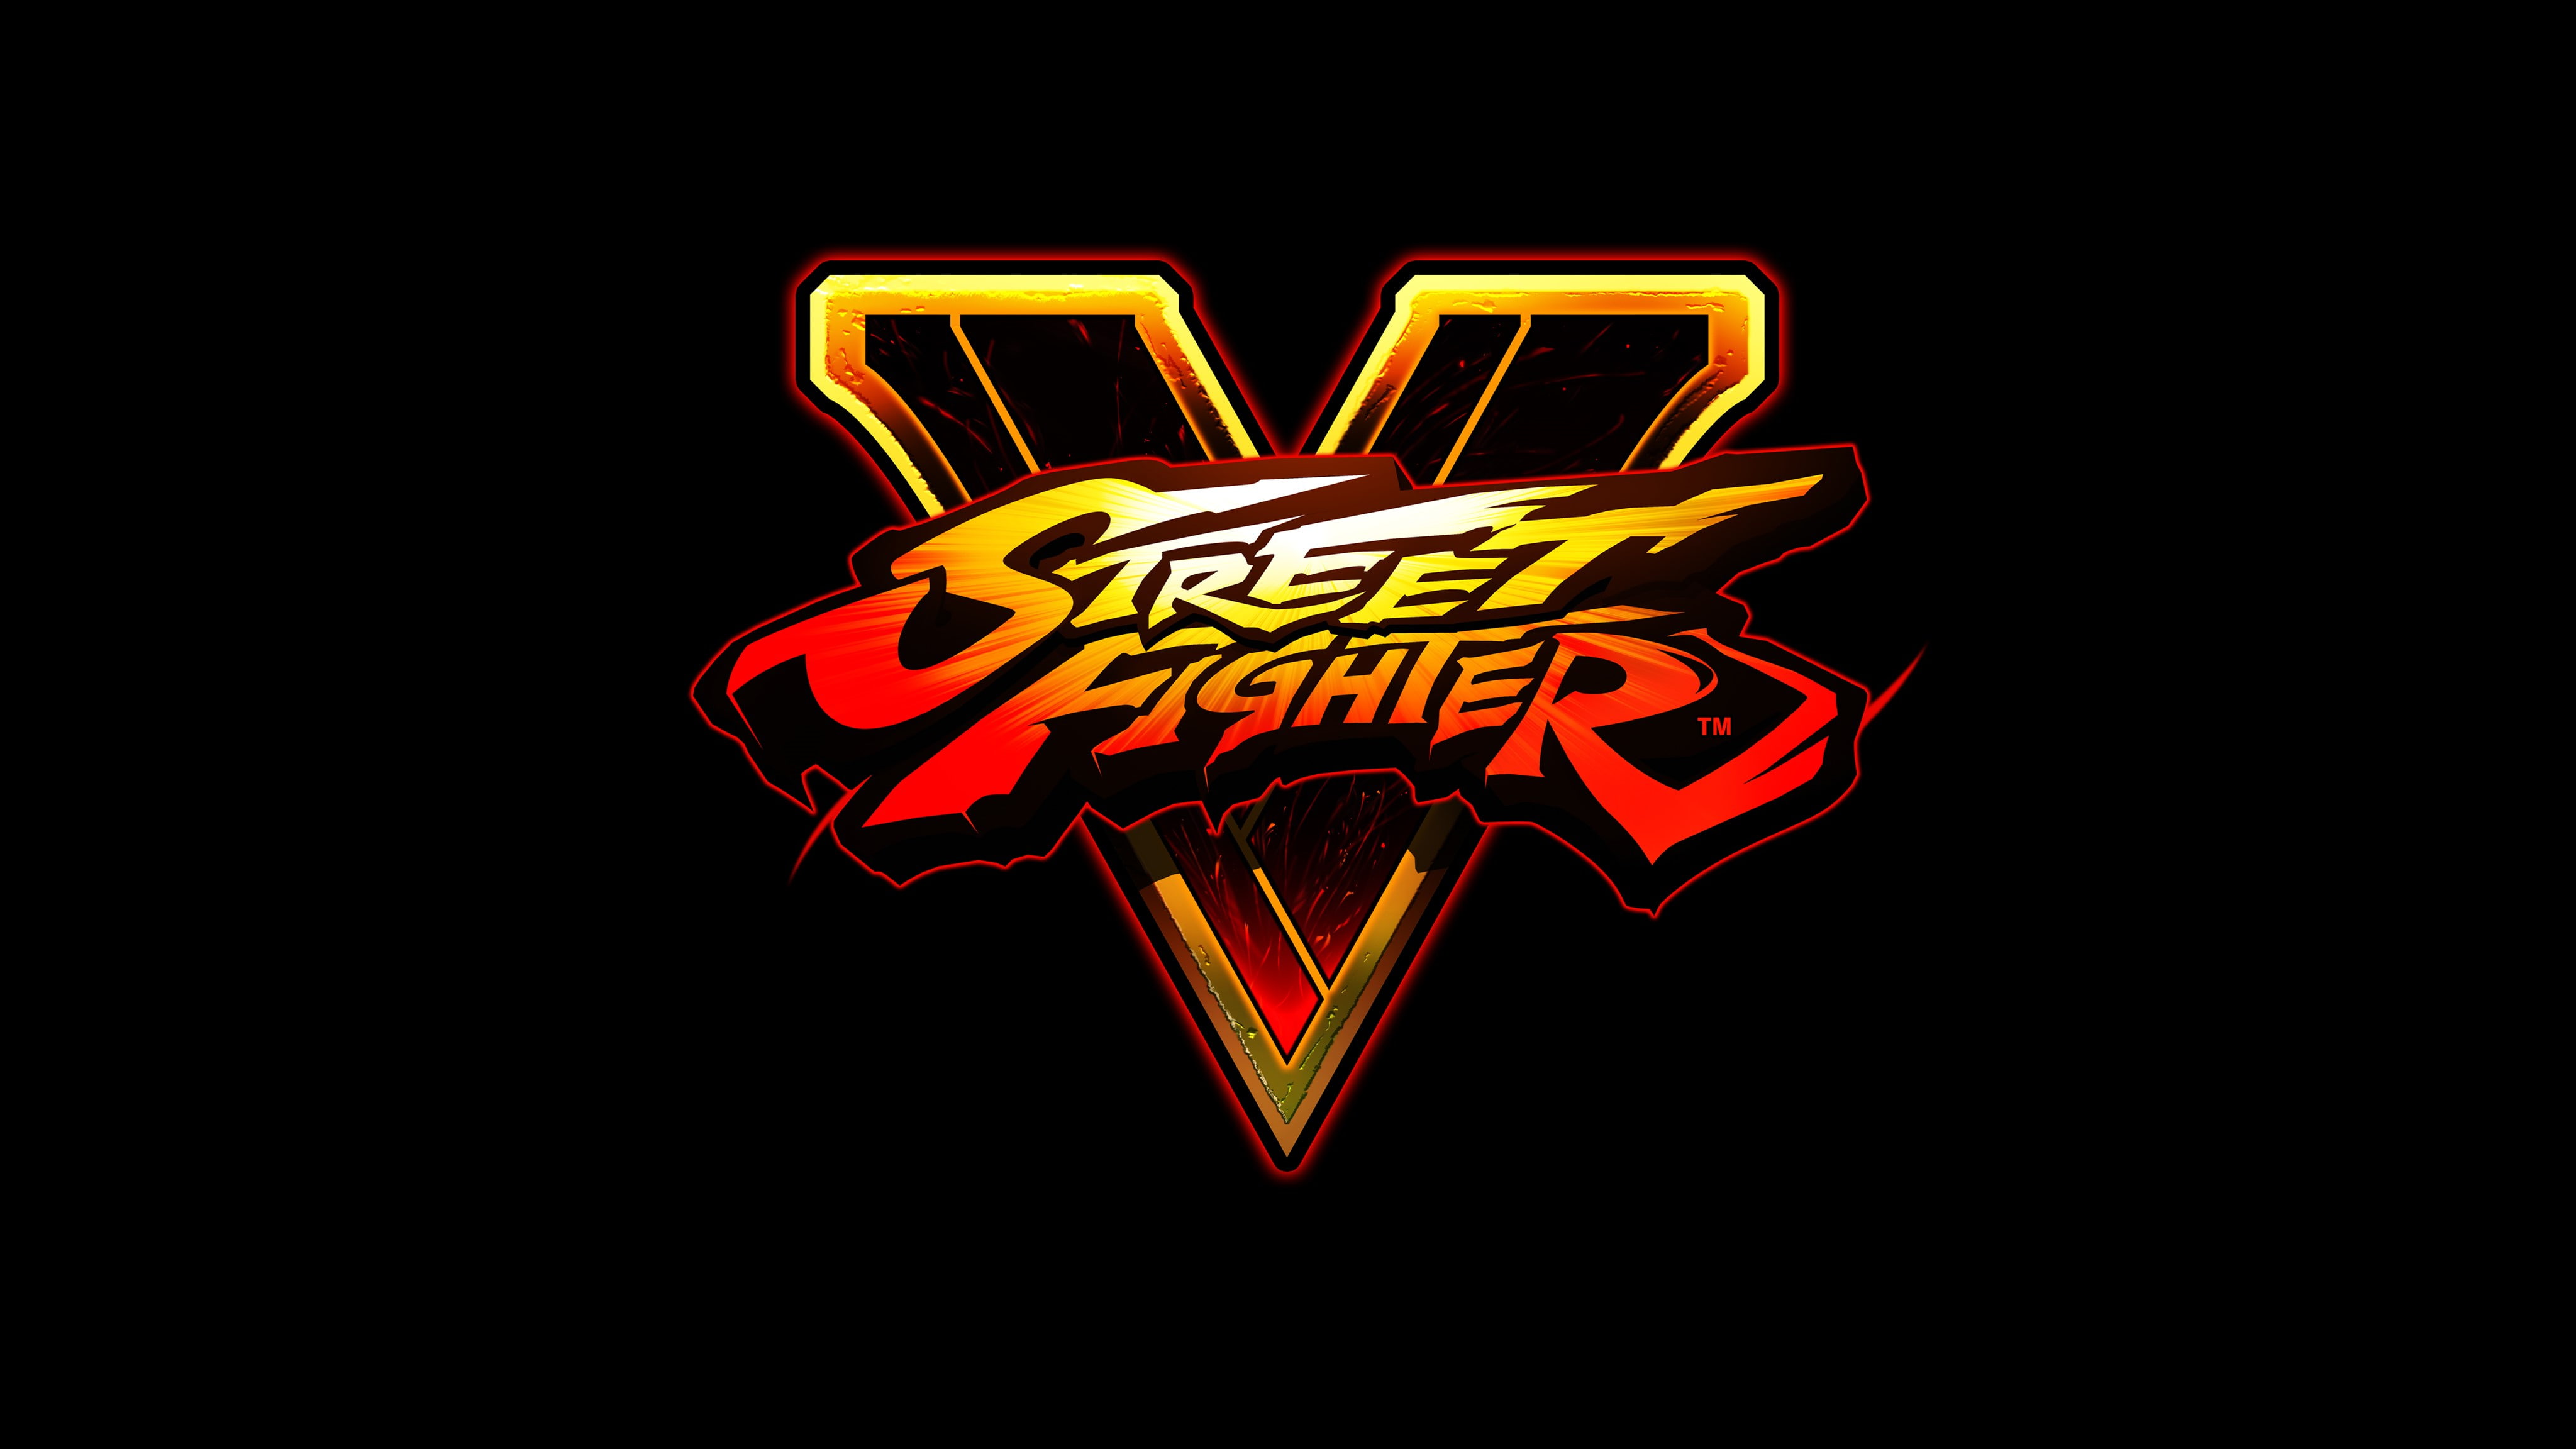 Street fighter v, Fighting, Logo, illuminated, neon, black background